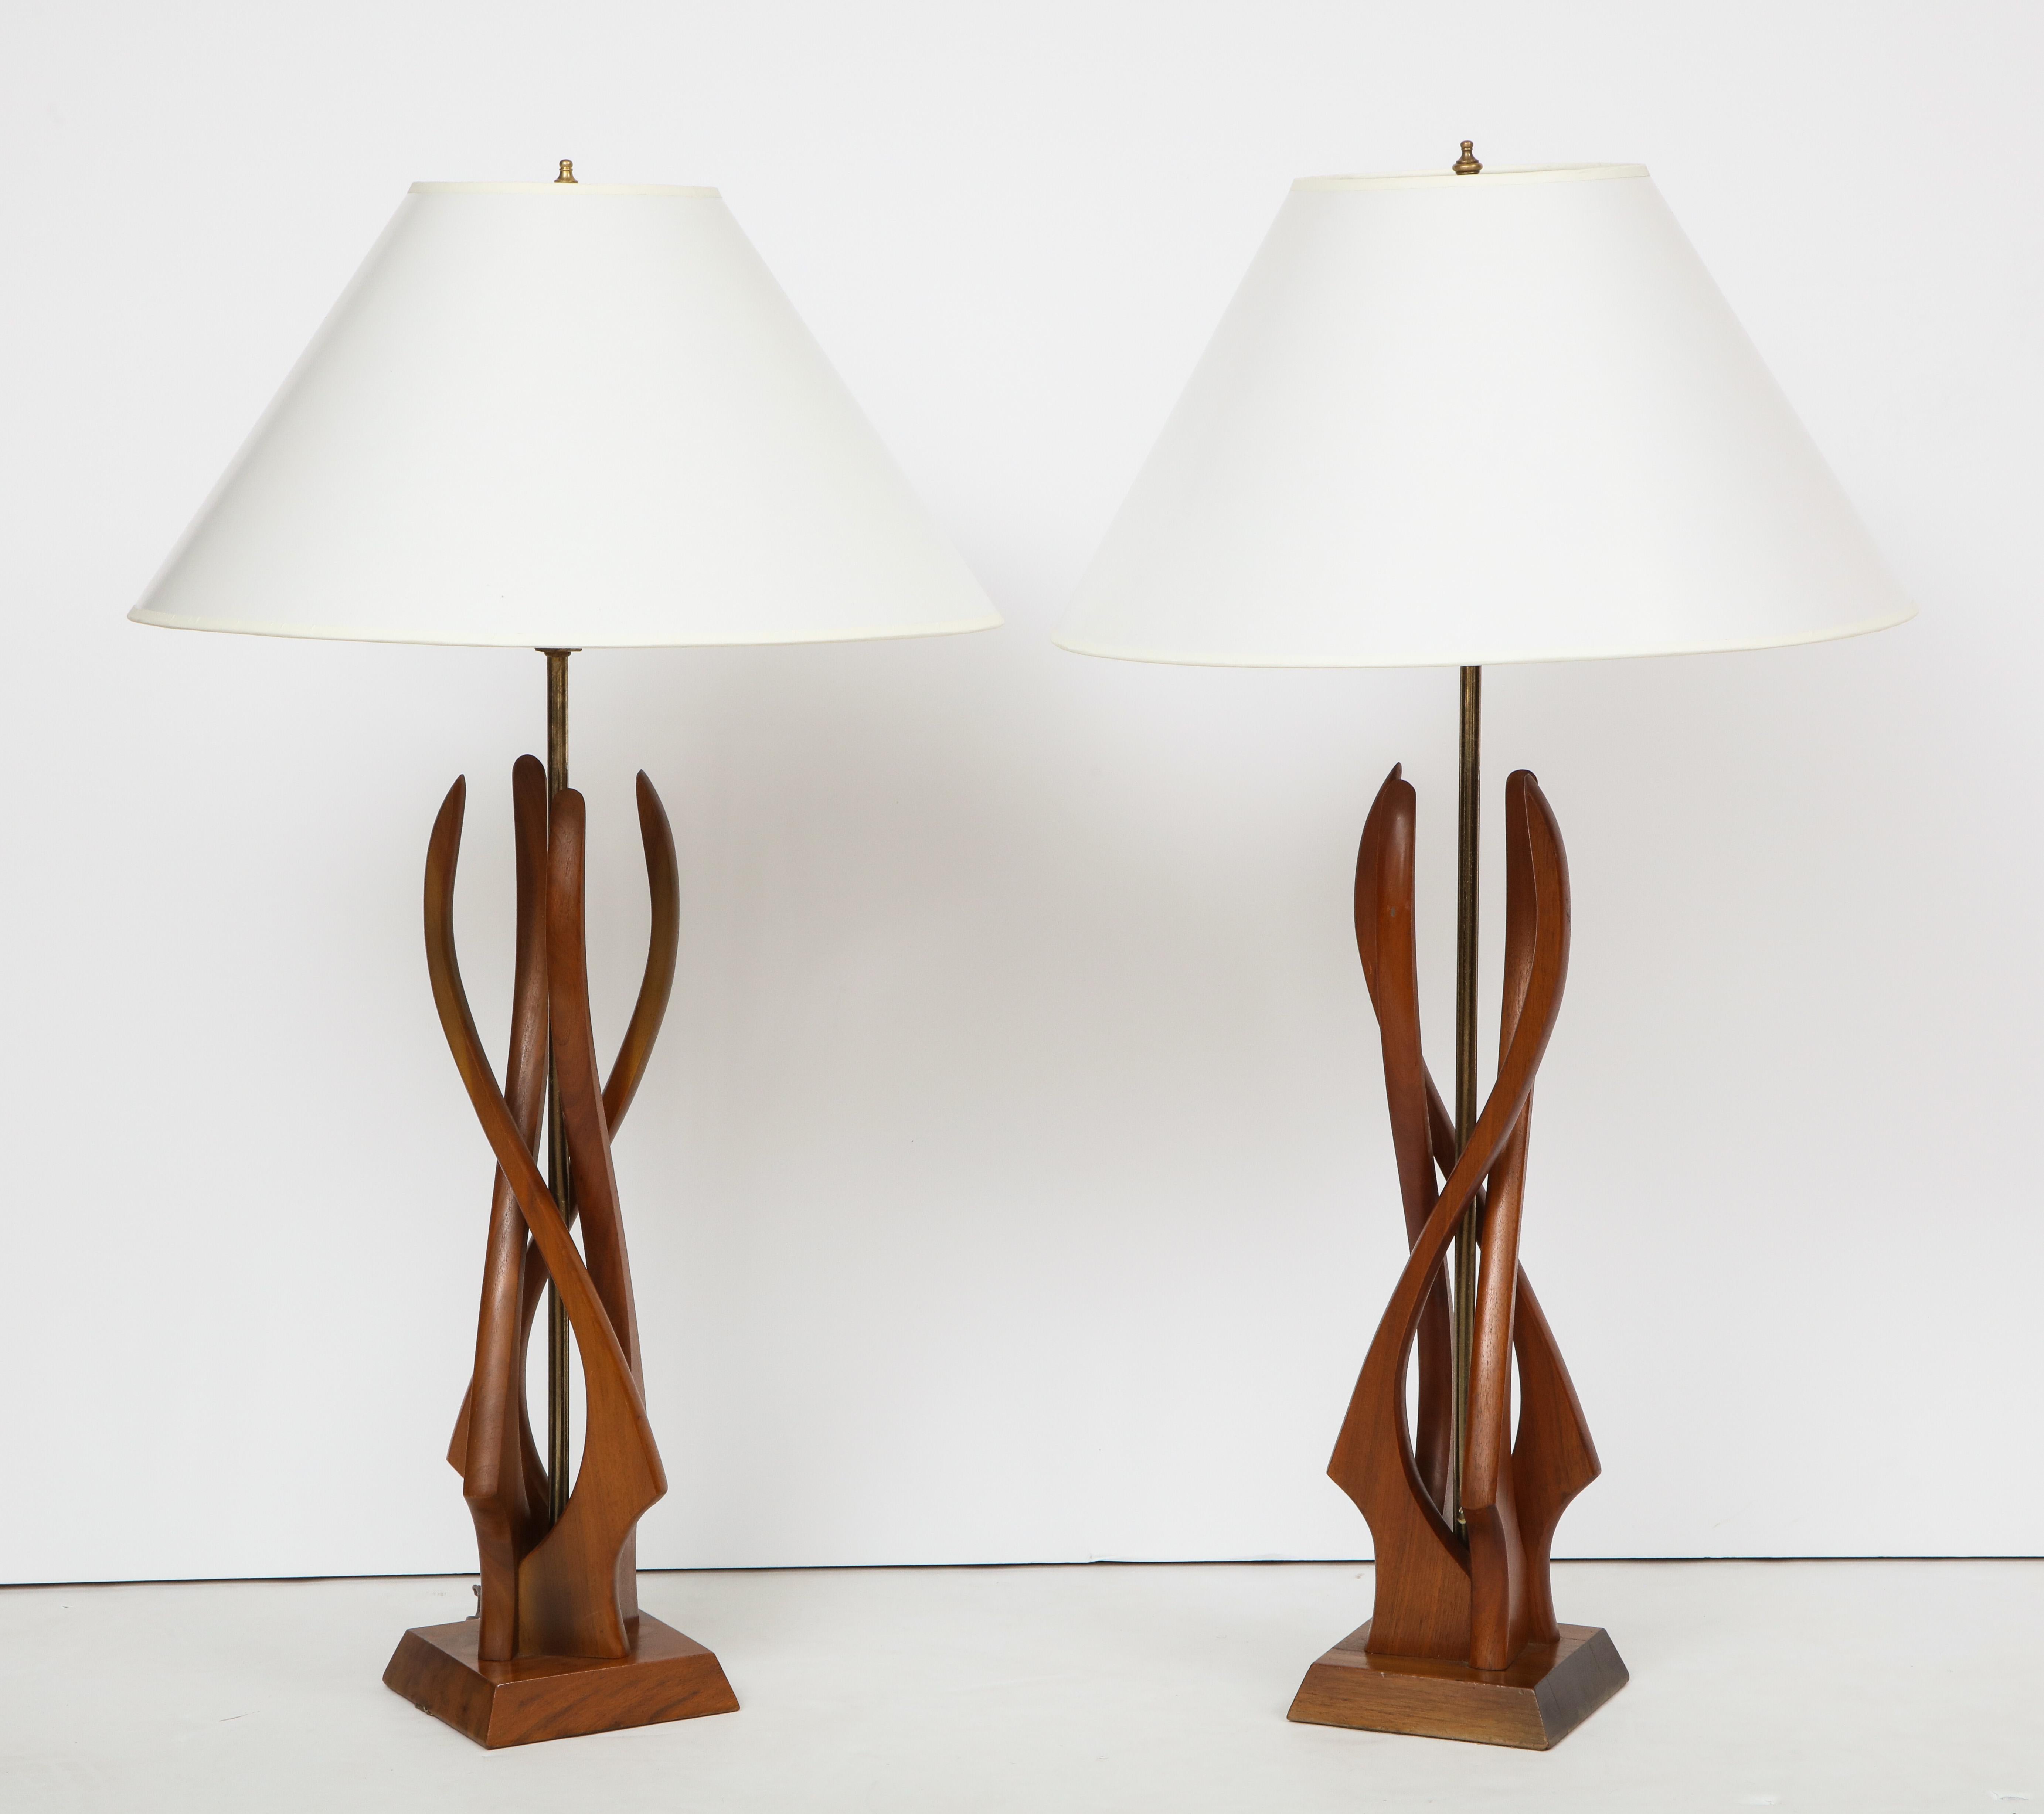 Pair of Mid-Century teakwood lamps
Danish.